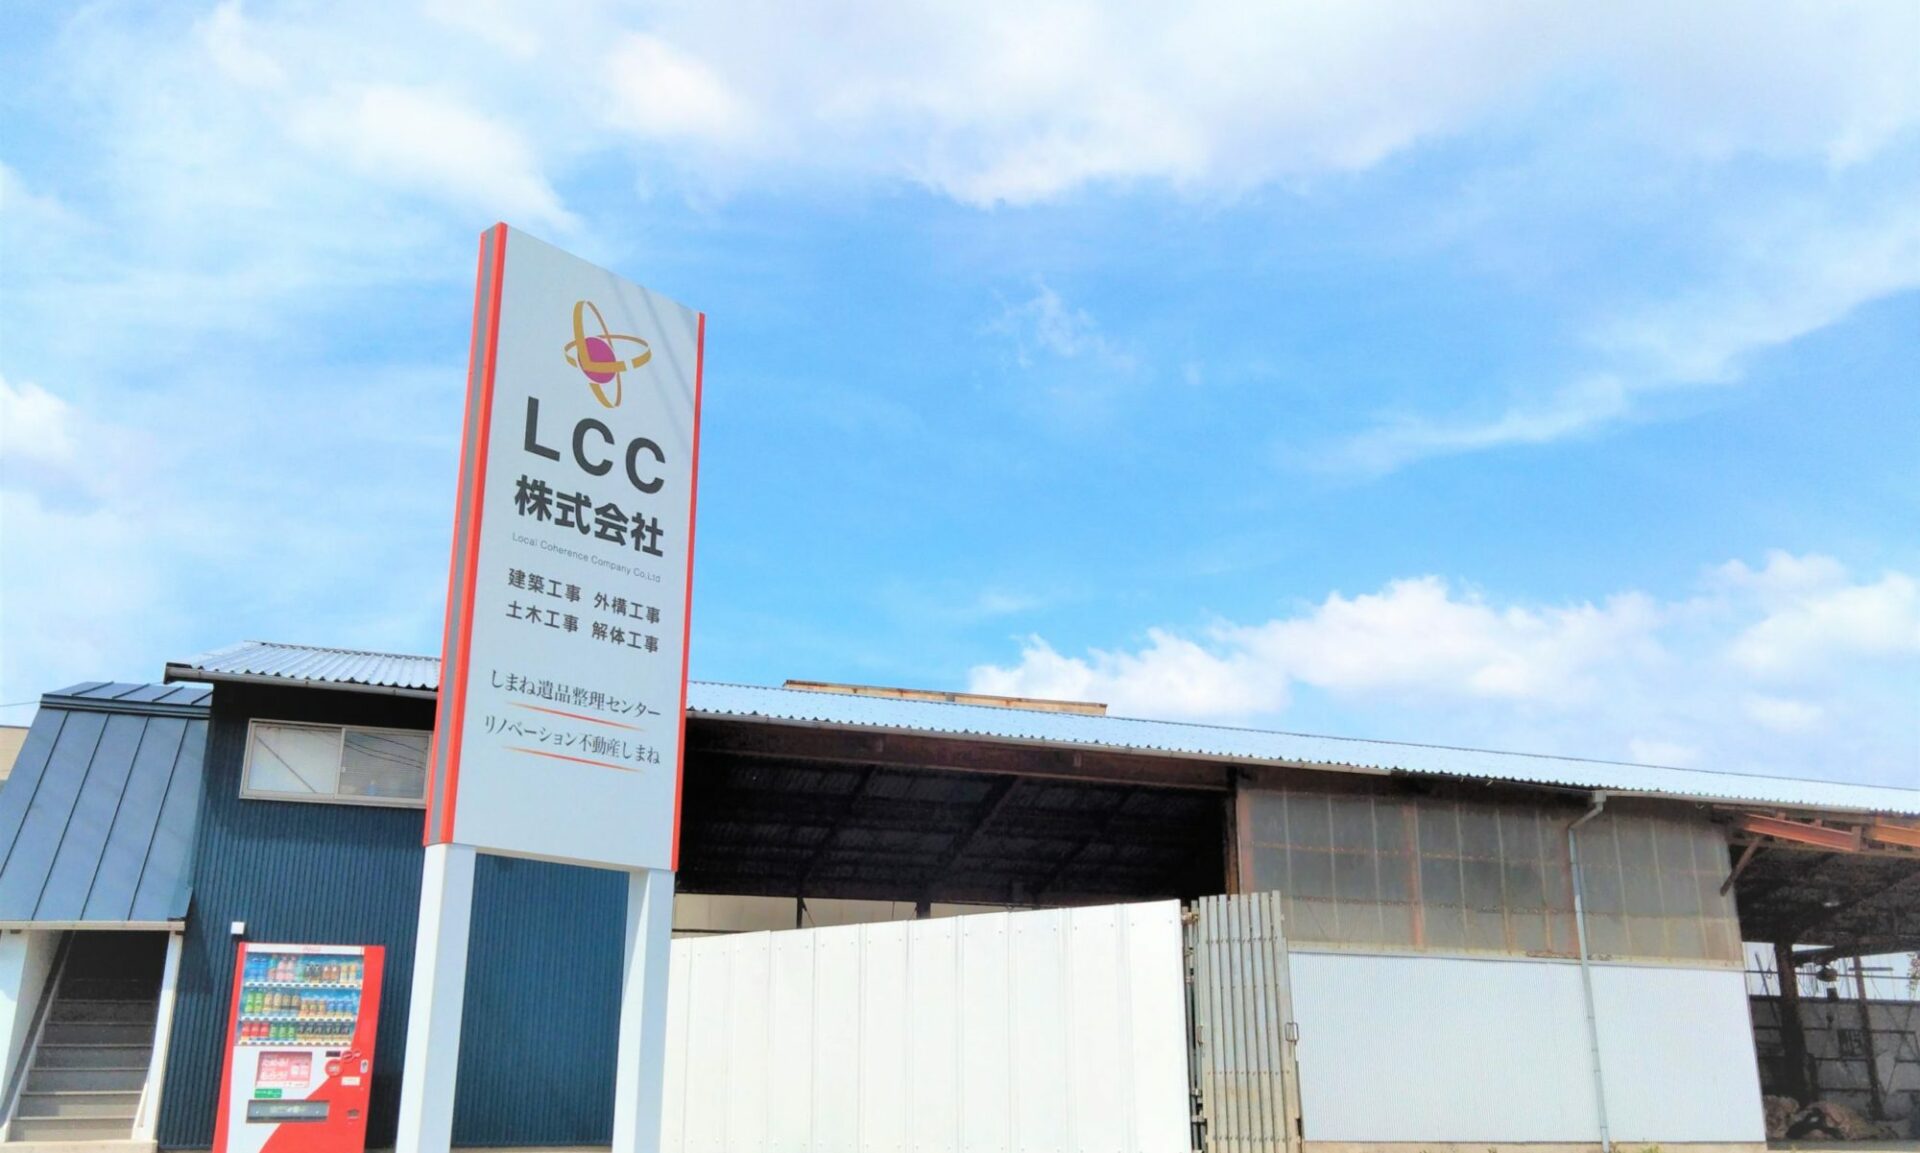 LCC株式会社-片付け施工事例
島根県出雲市での不用品片付け作業
お問合せカバー写真